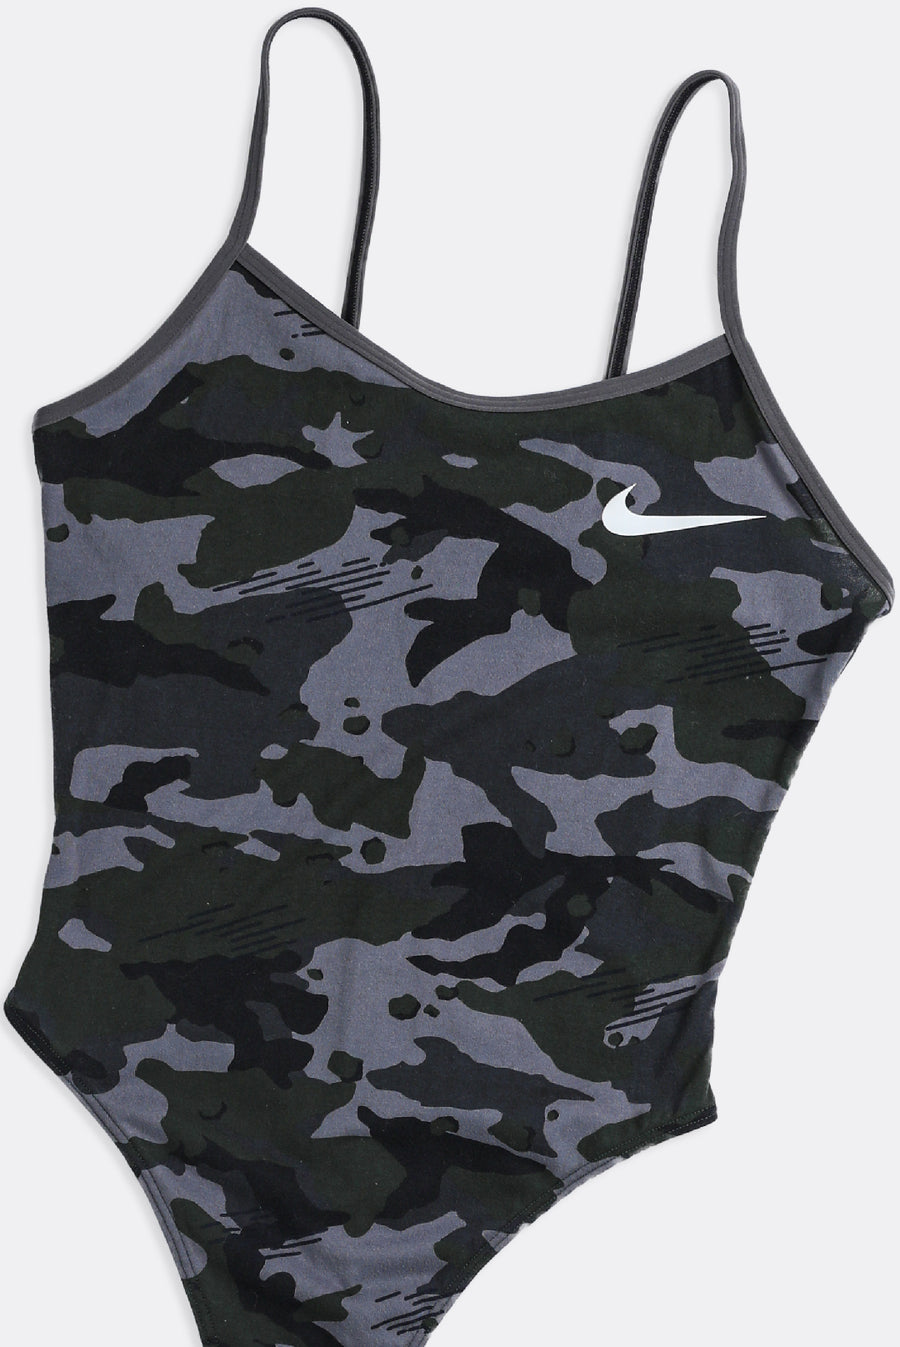 Rework Athletic Nike Bodysuit - XL